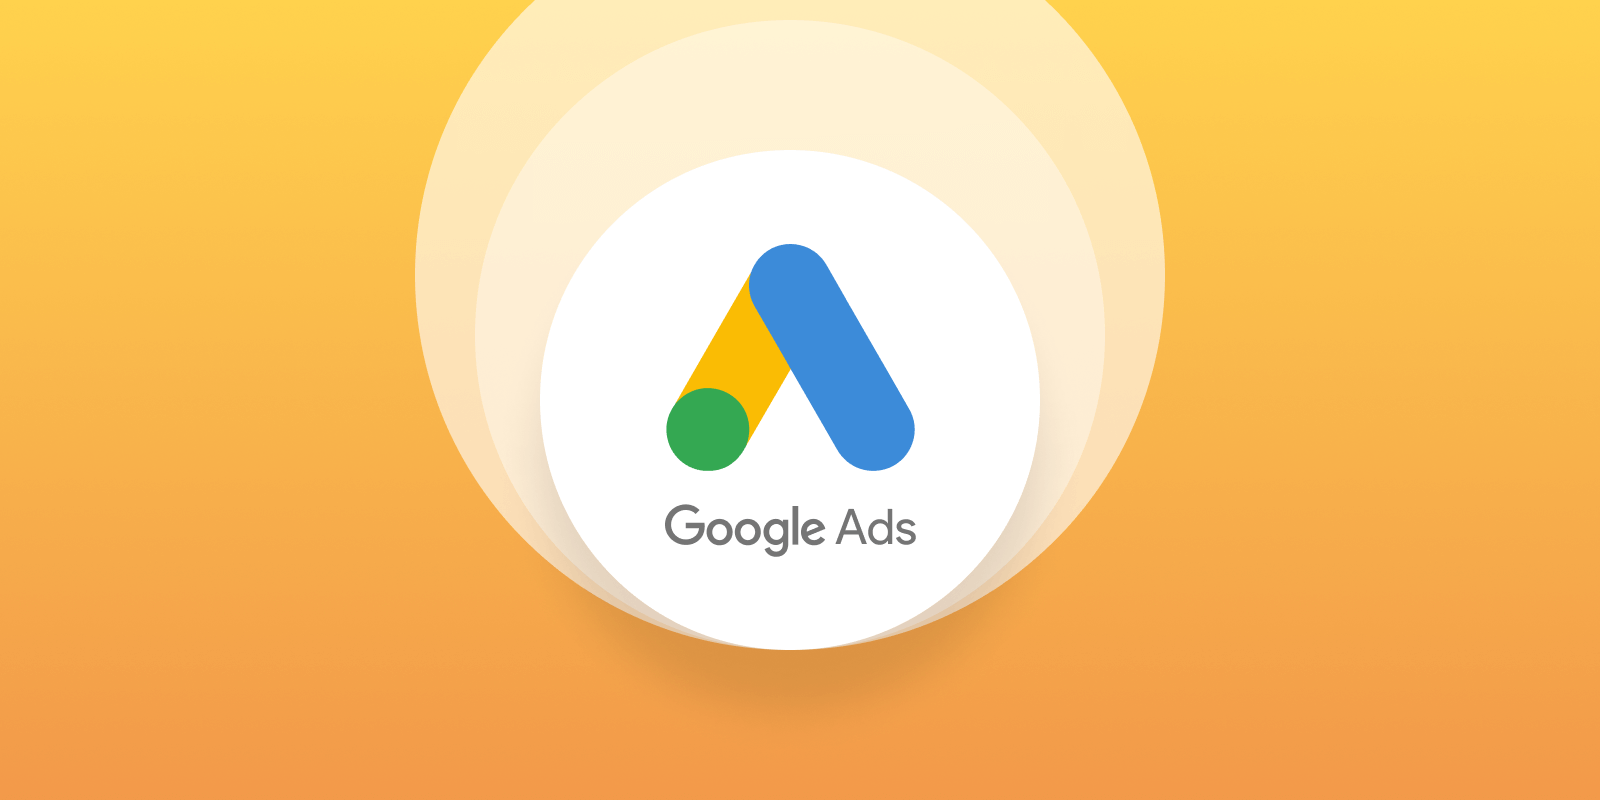 Marketing Matters: The History of Google Ads